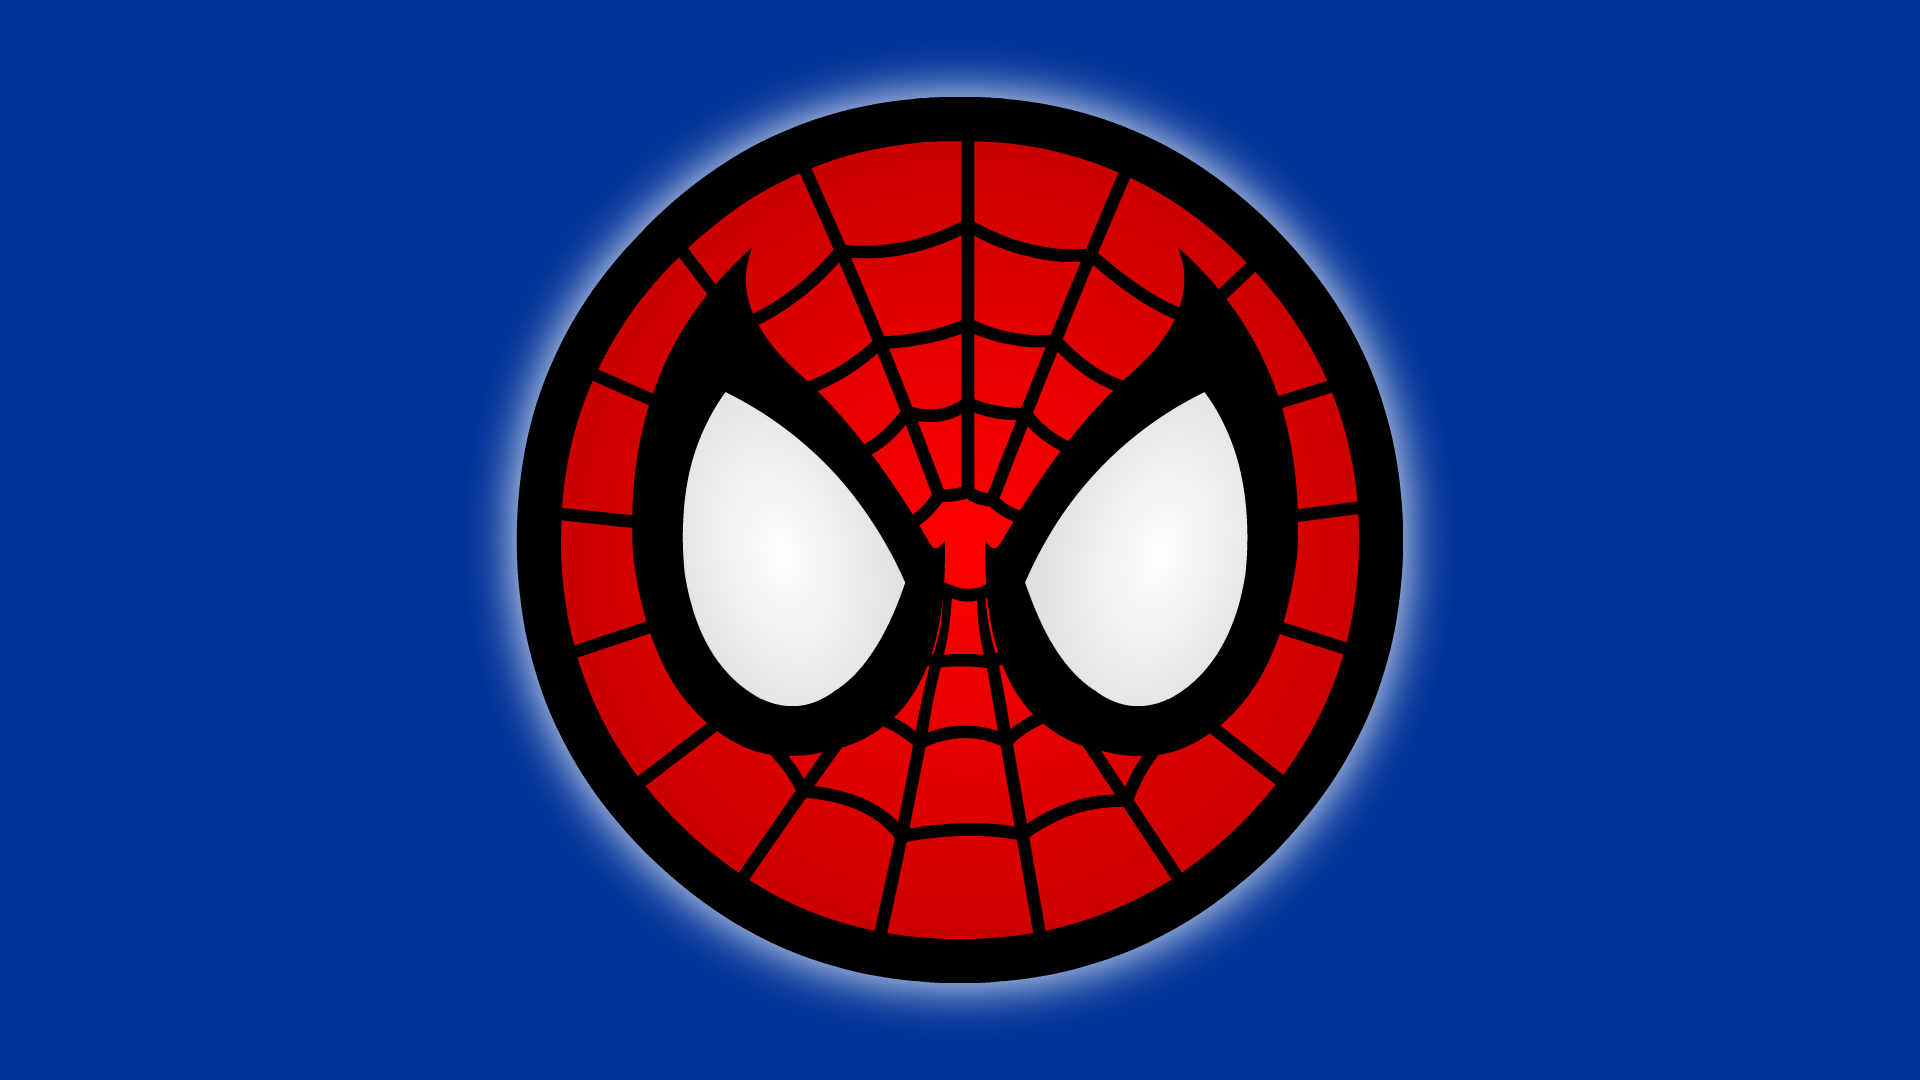 Symbiote Spider-Man Symbol by Yurtigo on DeviantArt